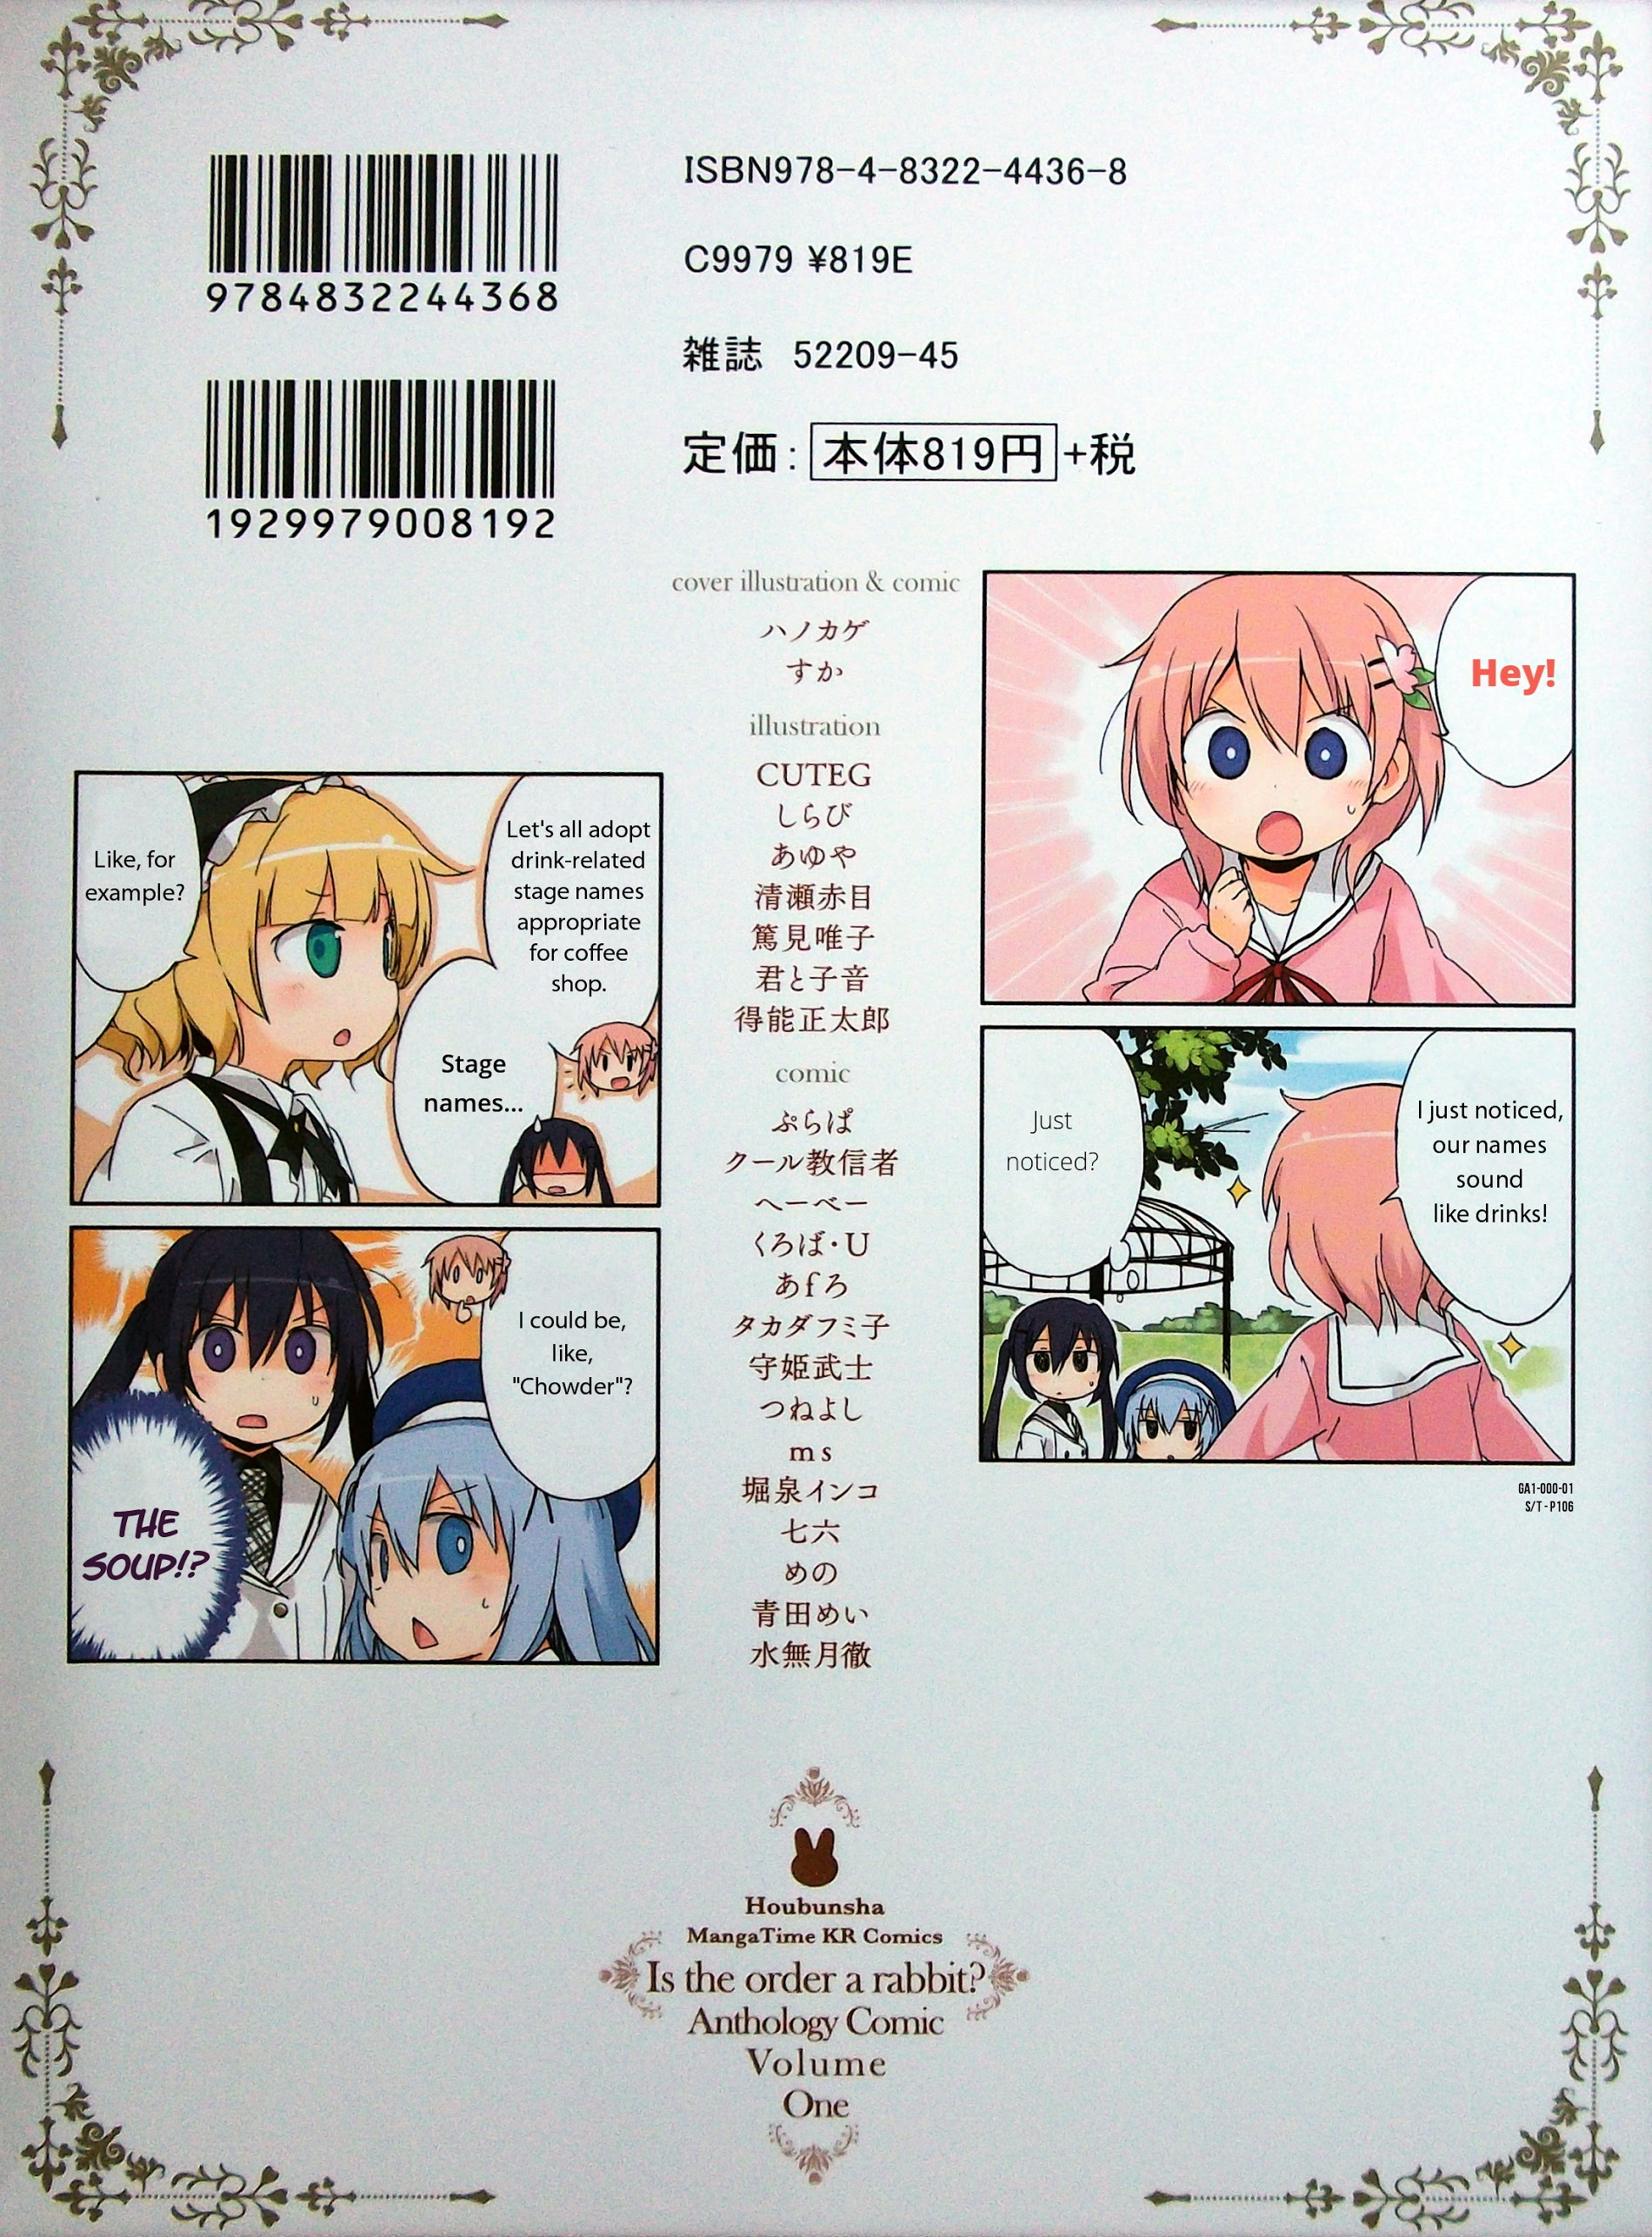 Gochuumon Wa Usagi Desu Ka? Anthology Comic Vol.1 Chapter 0 : Cover Comics [By: Suka And Hanokage] - Picture 2